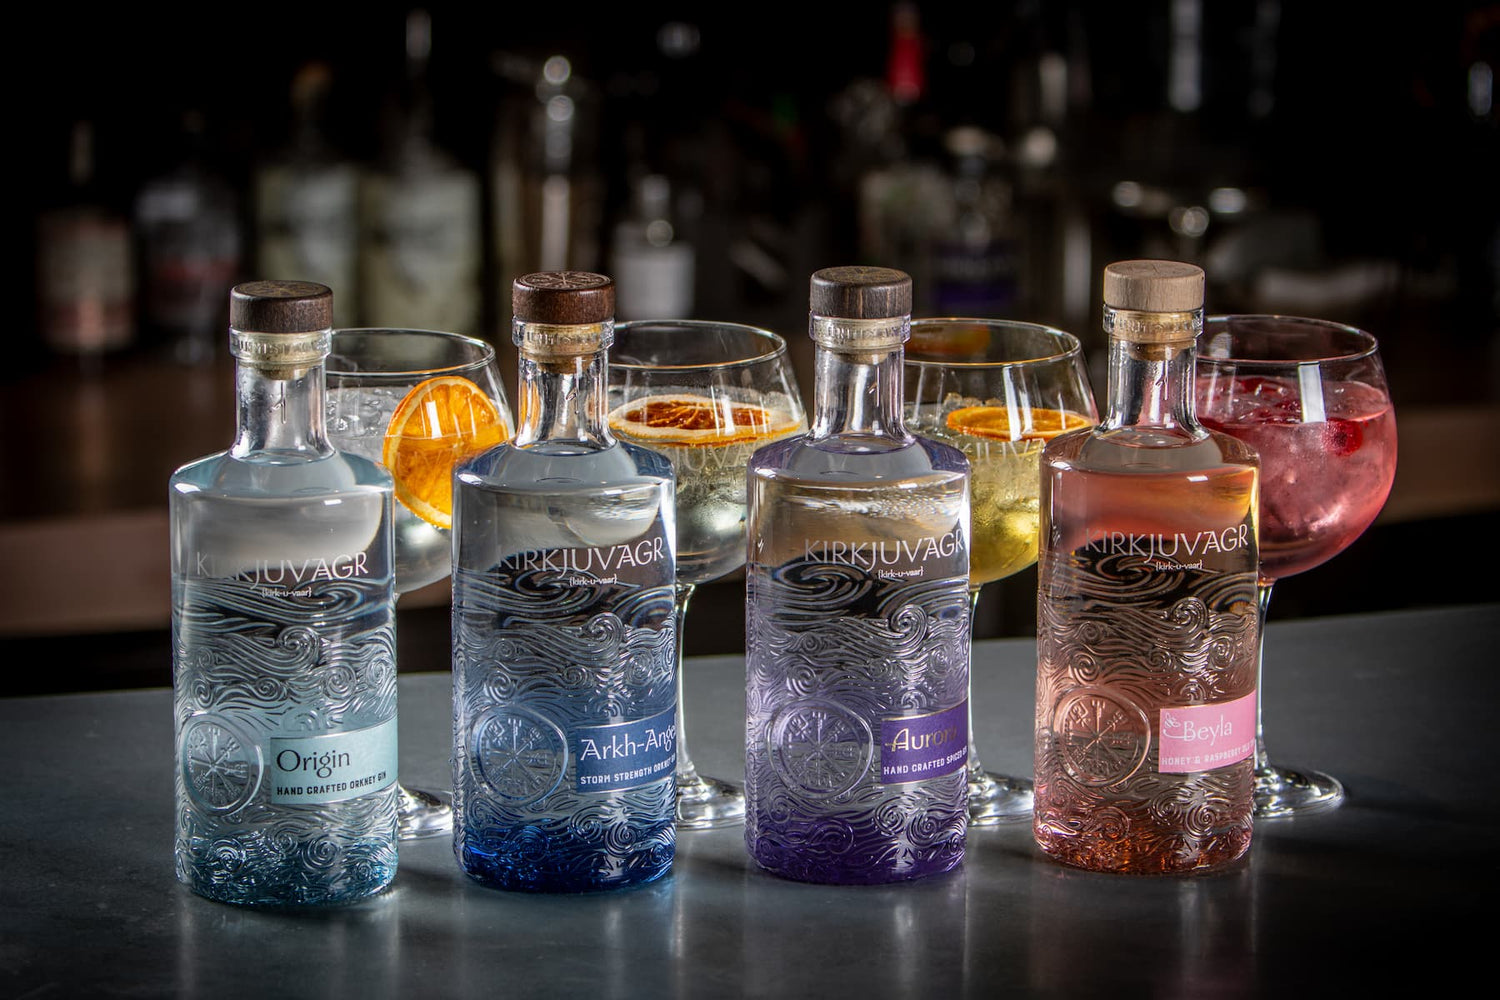 Introducing the new Kirkjuvagr Gin bottles!